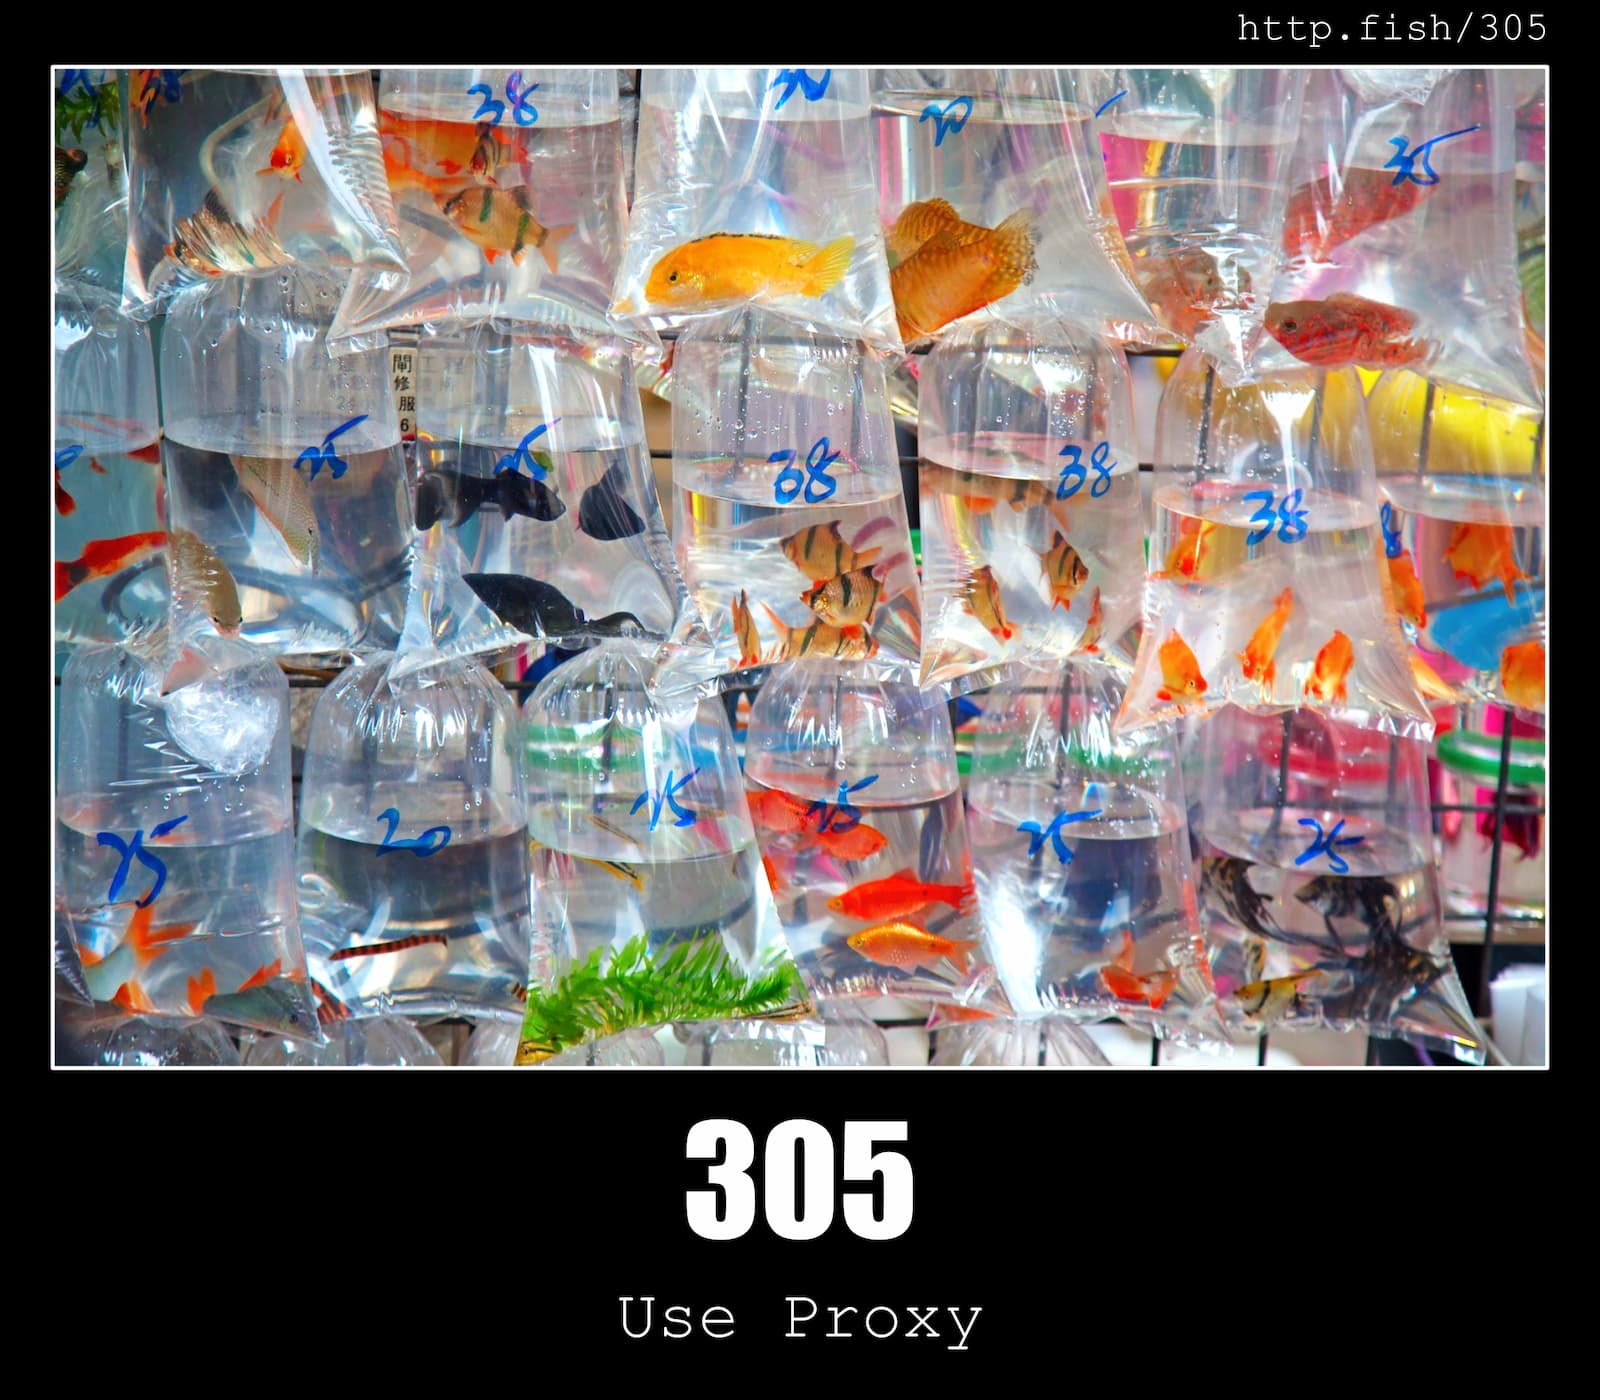 HTTP Status Code 305 Use Proxy & Fish